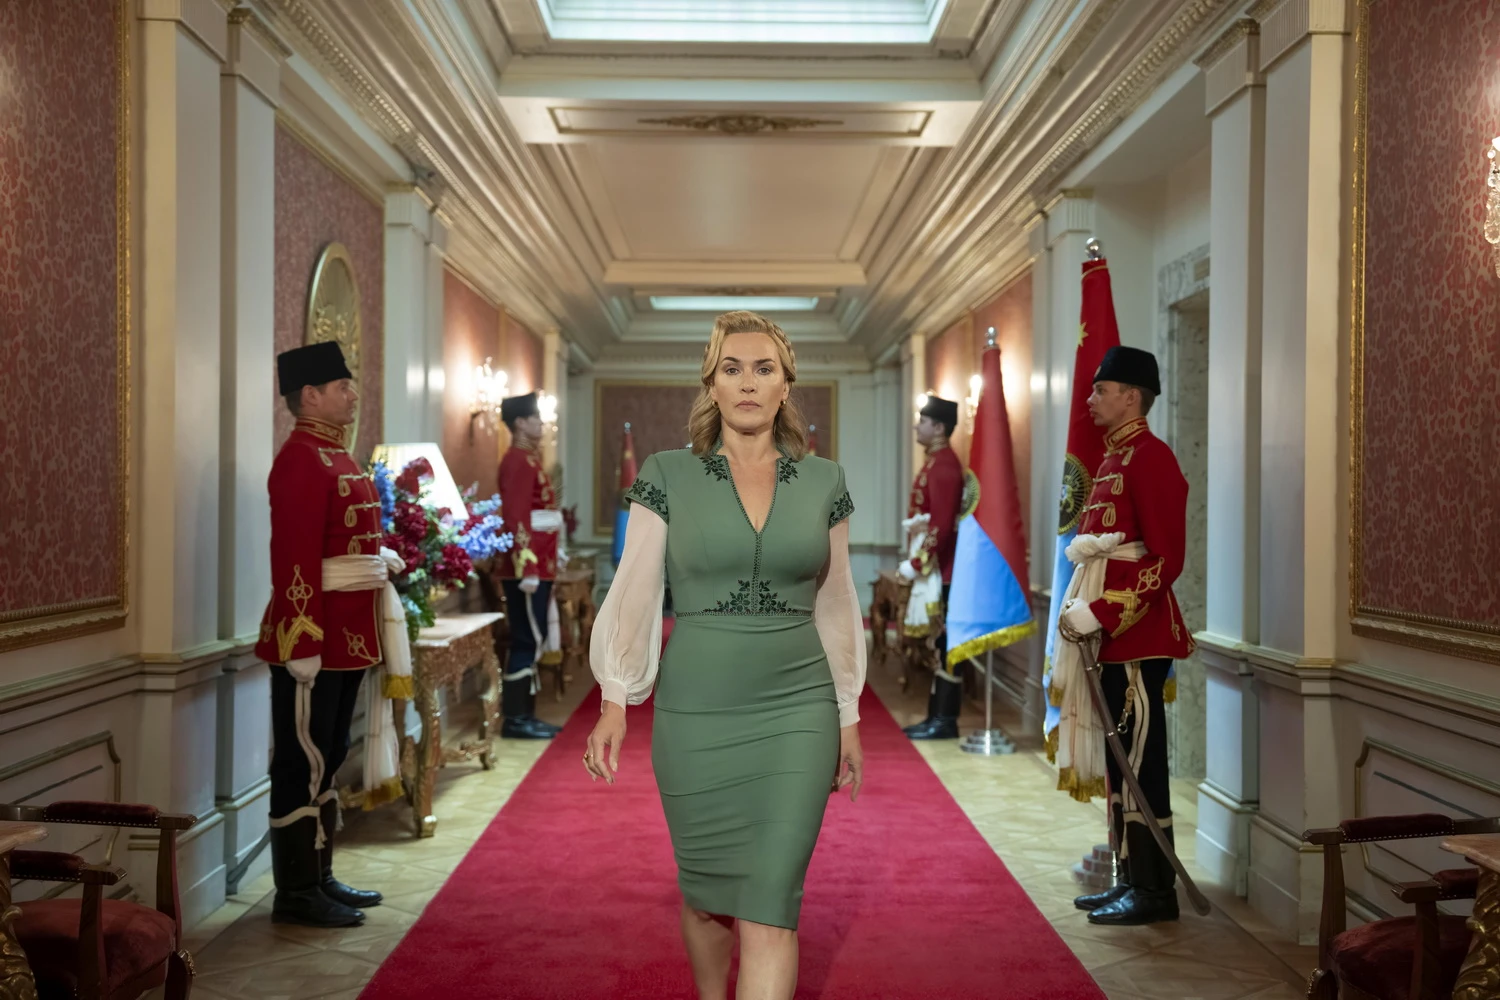 Kate Winslet als Diktatorin in "The Regime" (© Home Box Office, Inc.)